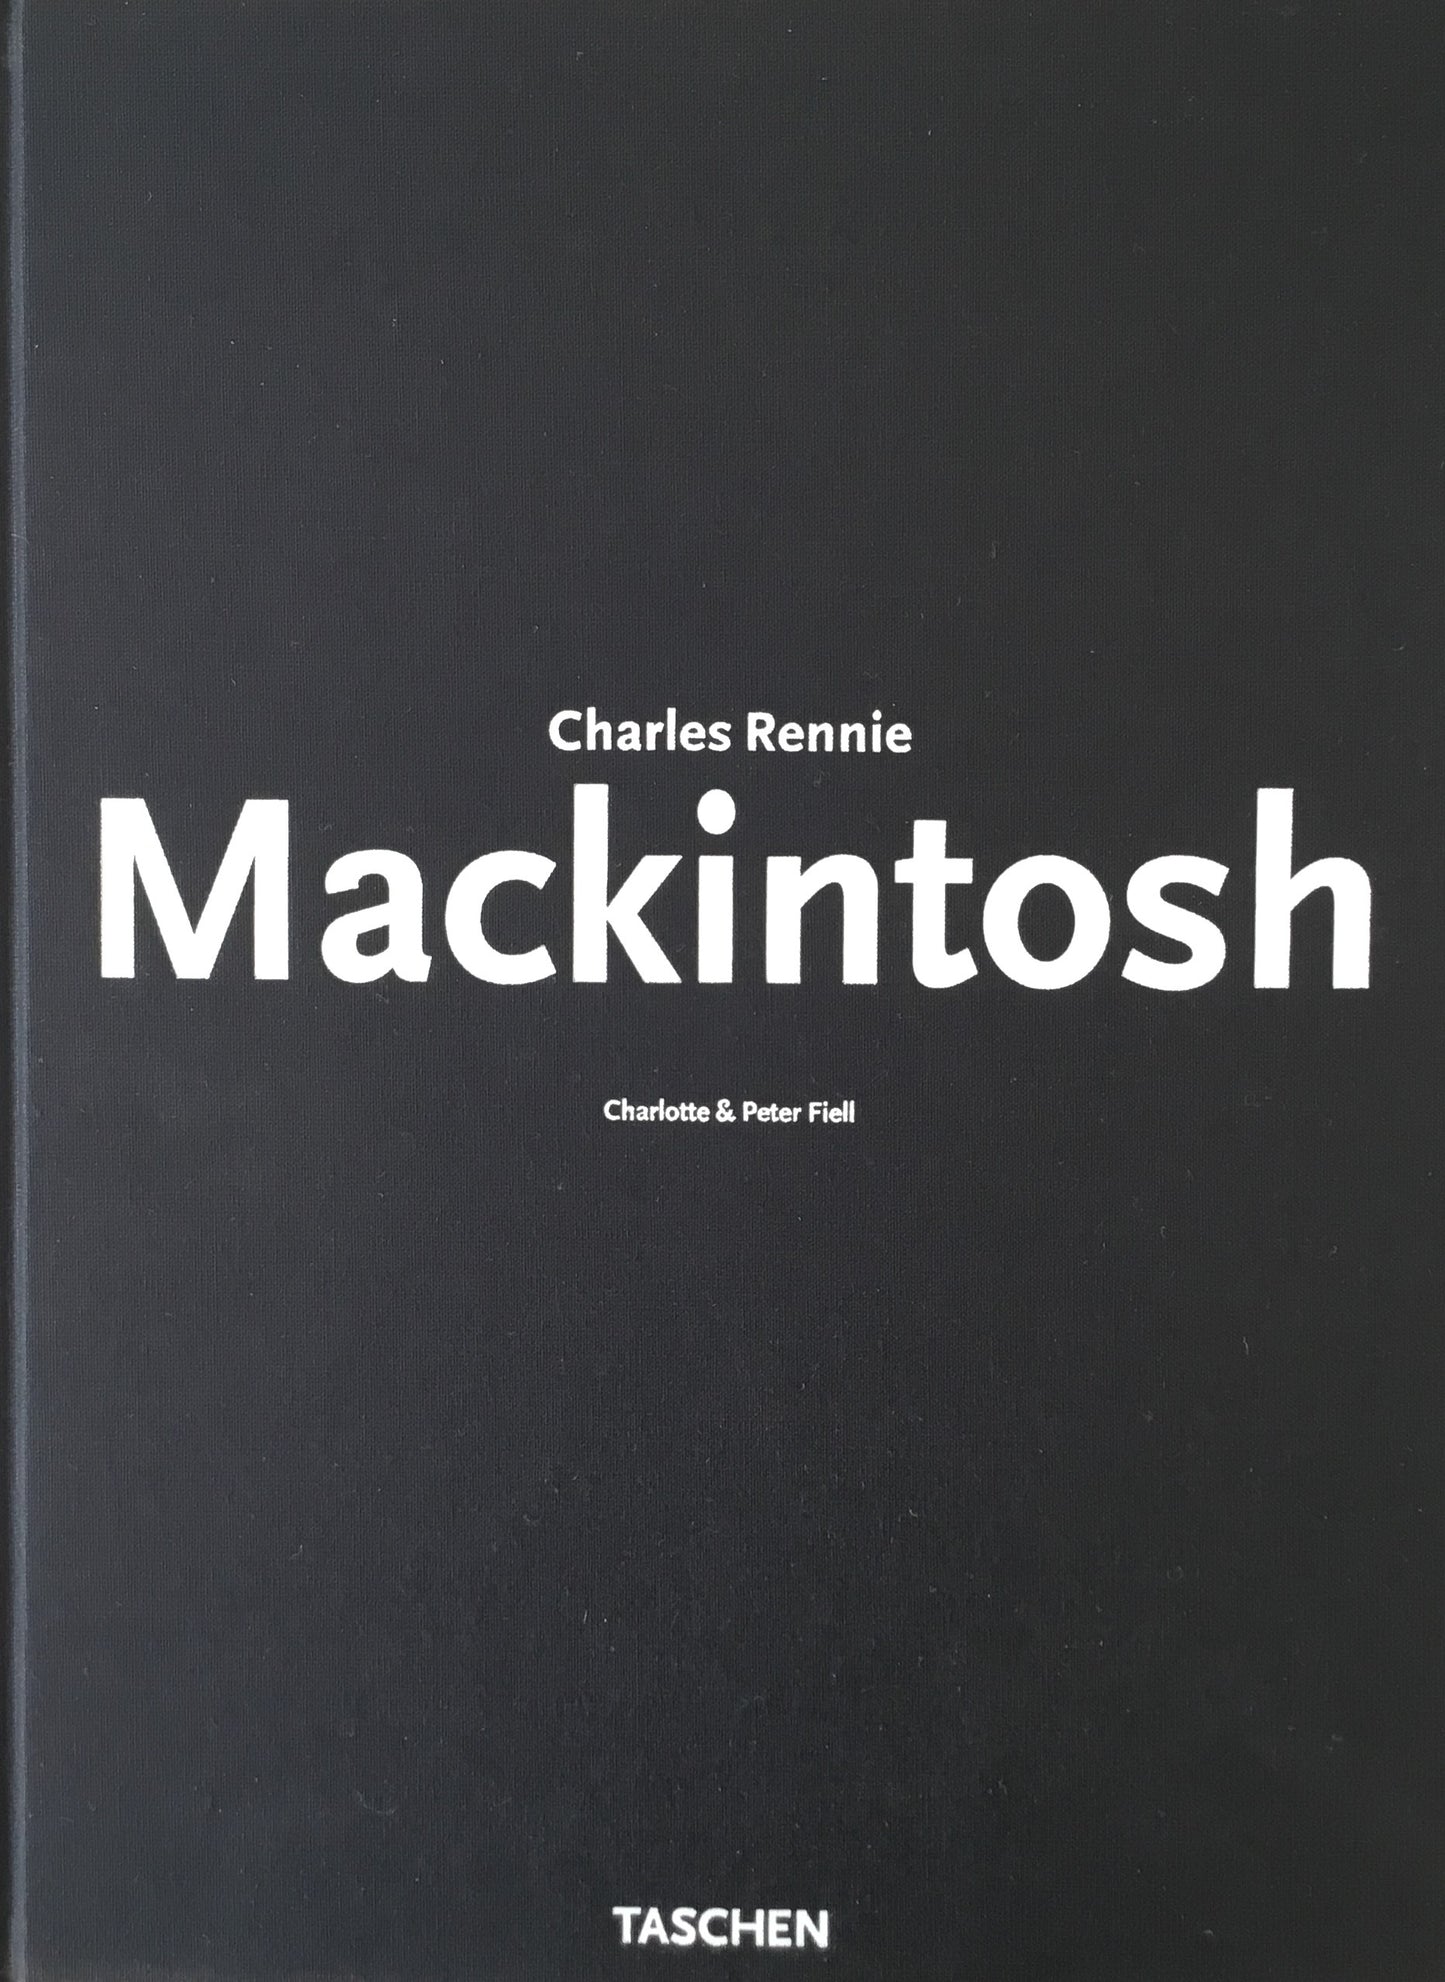 Charles Rennie Mackintosh(1868-1928)　Charles Rennie　チャールズ・レニー・マッキントッシュ